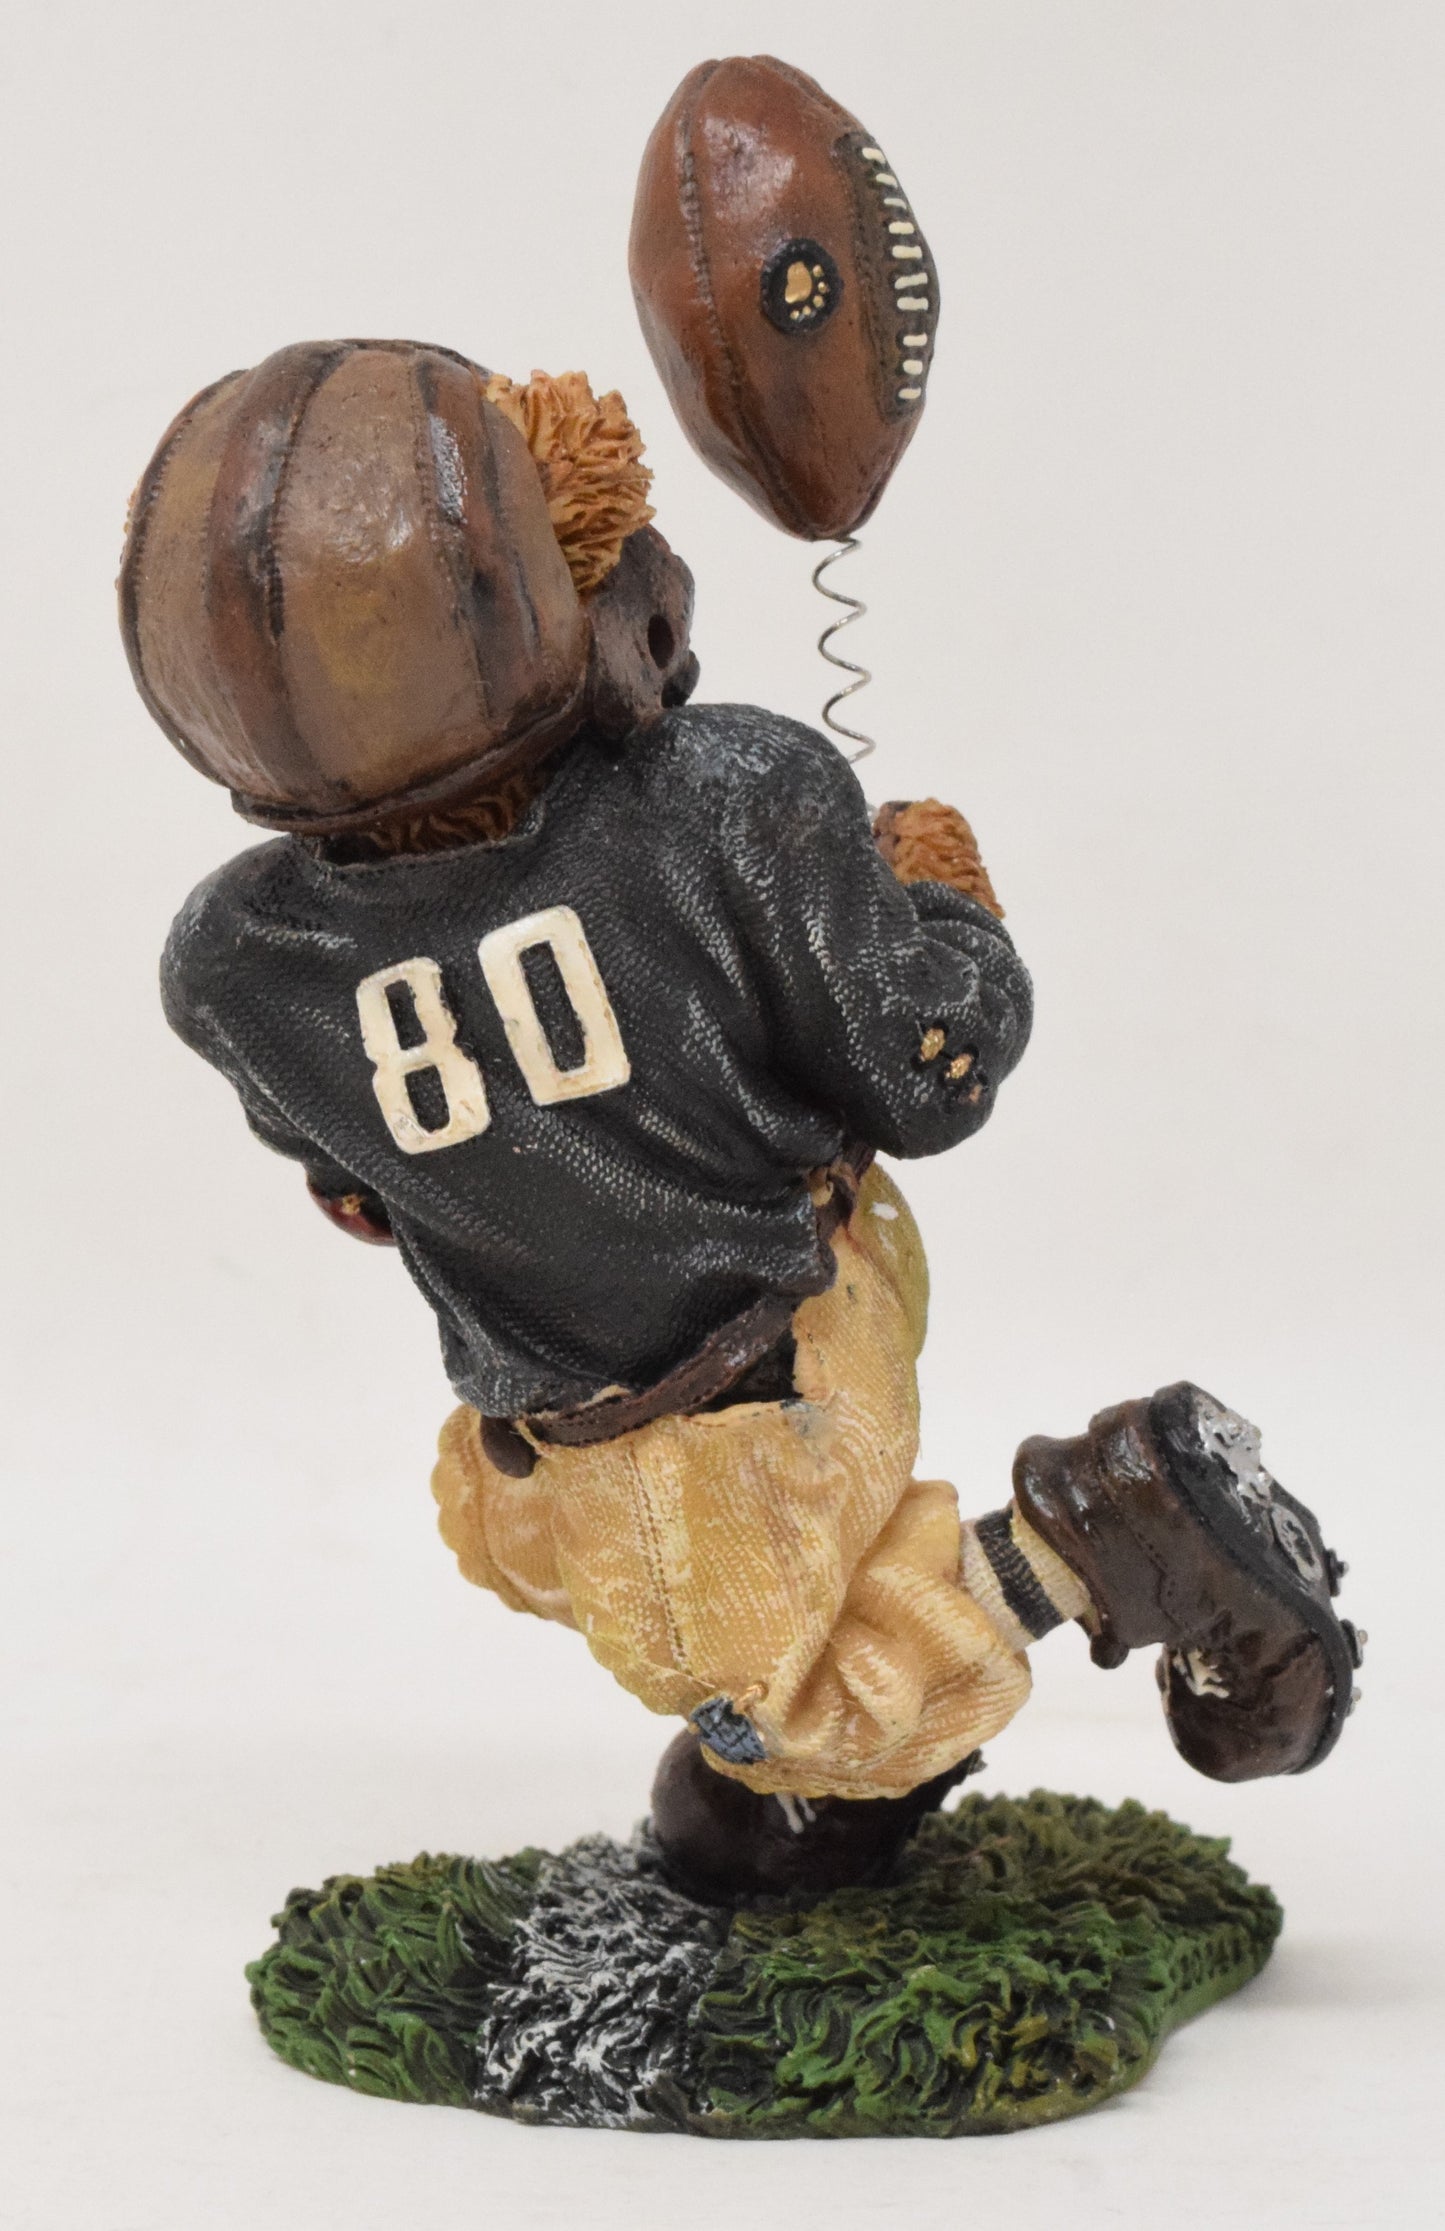 Bodys Bears Bearstone Vinny Catch Em All 4th And Long Football Figurine 2004 New